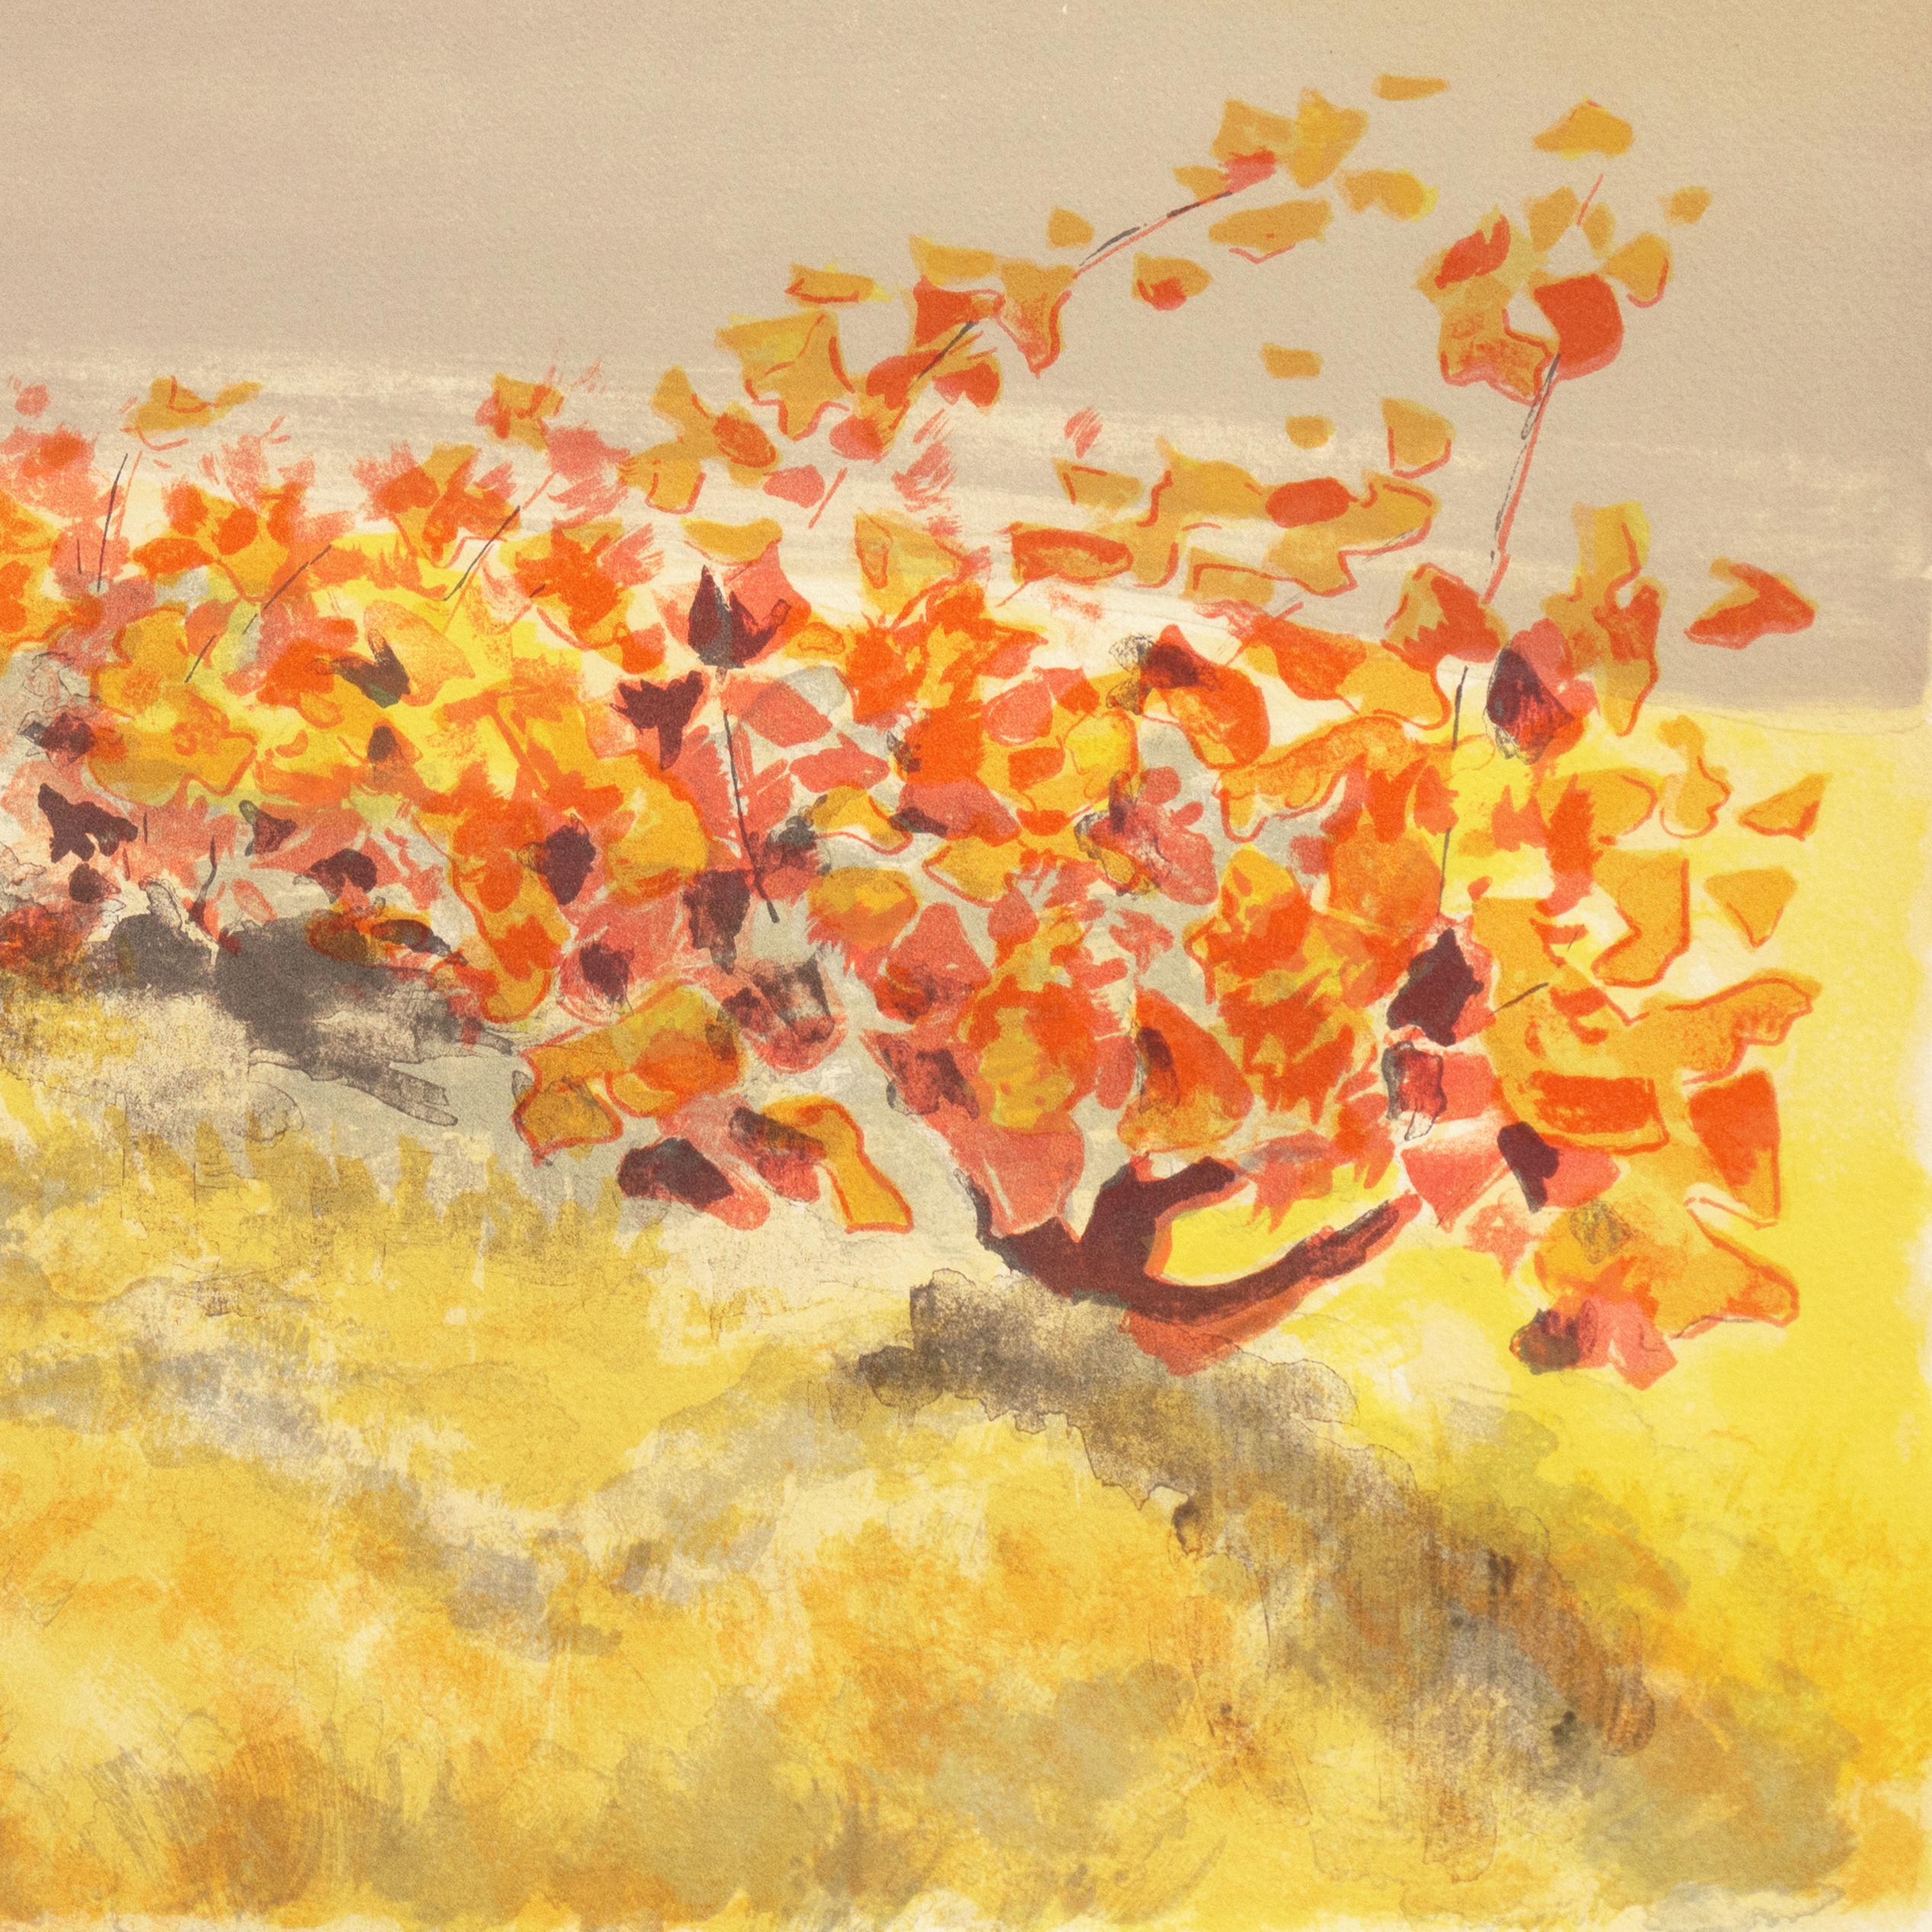 'Provençal Vineyard', French Post-Impressionist Landscape, Paris Academie Julian 2